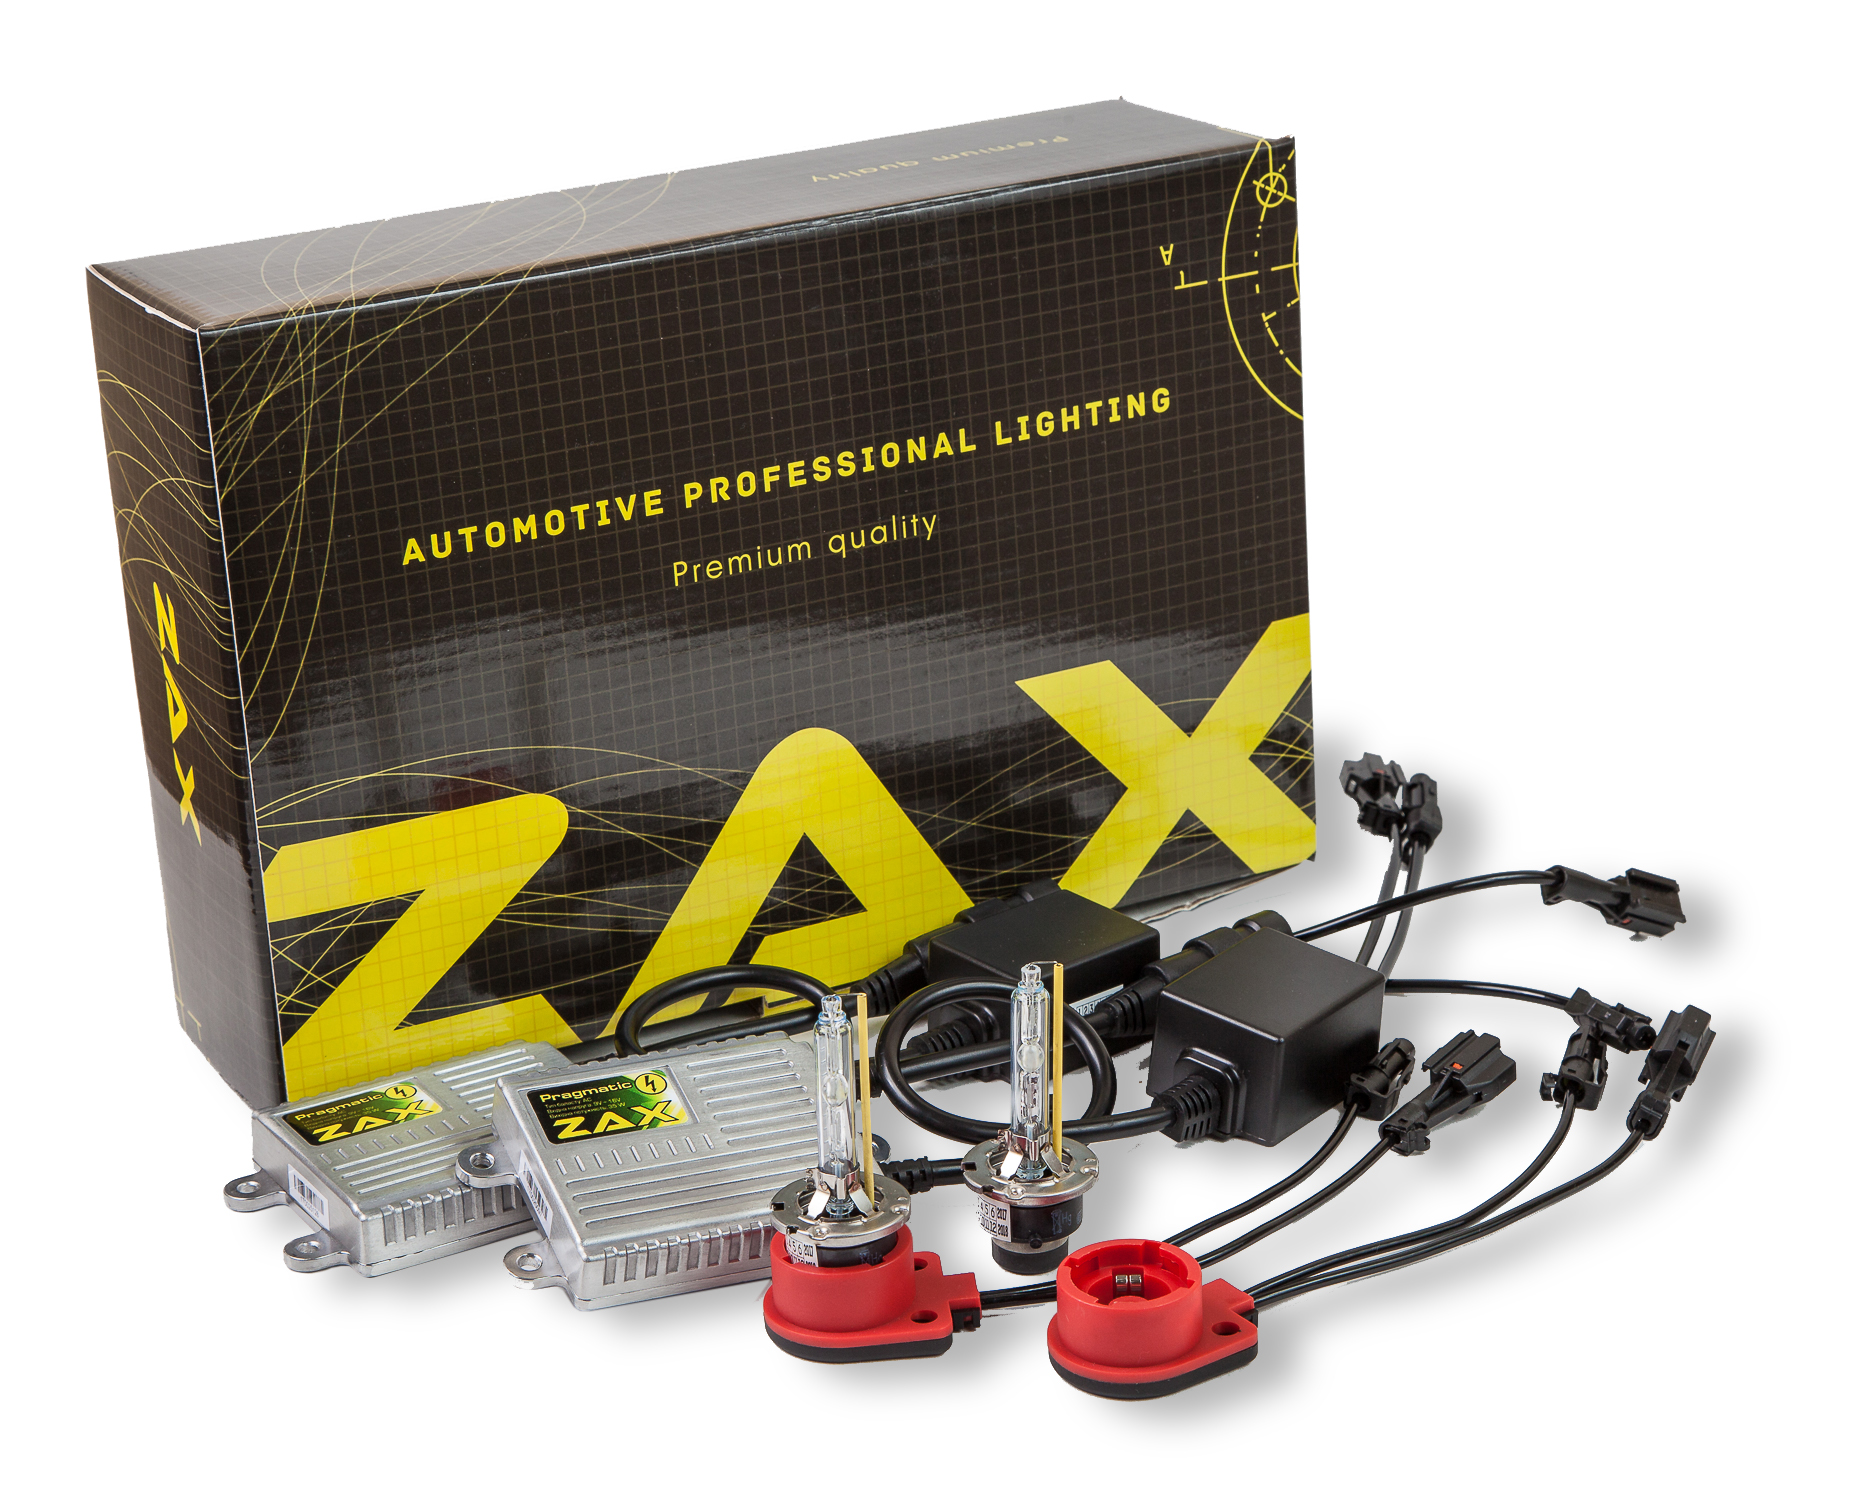 Комплект ксенона ZAX Pragmatic 35W 9-16V D2S +50% Metal 6000K (hub_dxCp63141)